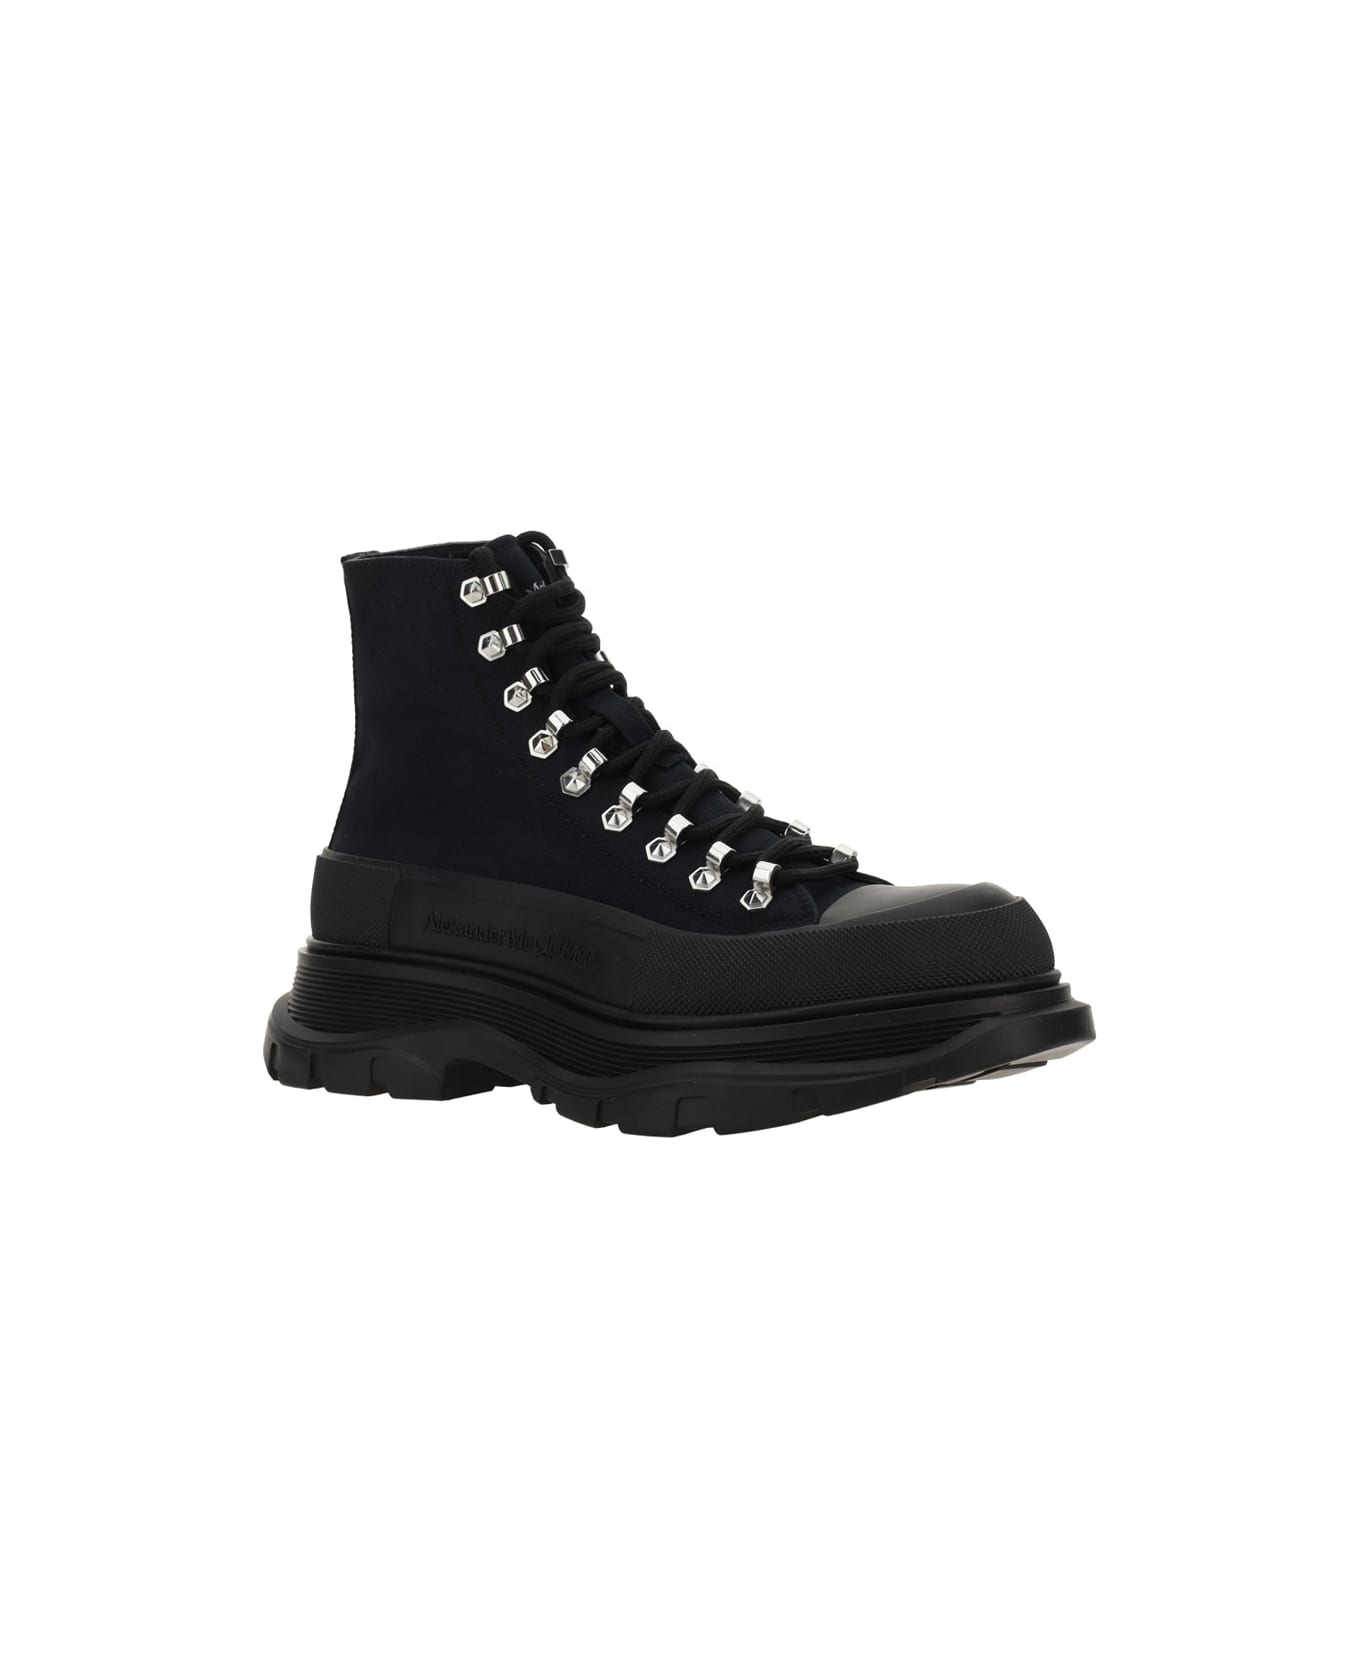 Alexander McQueen Ankle Boots - Blk/blk/silv